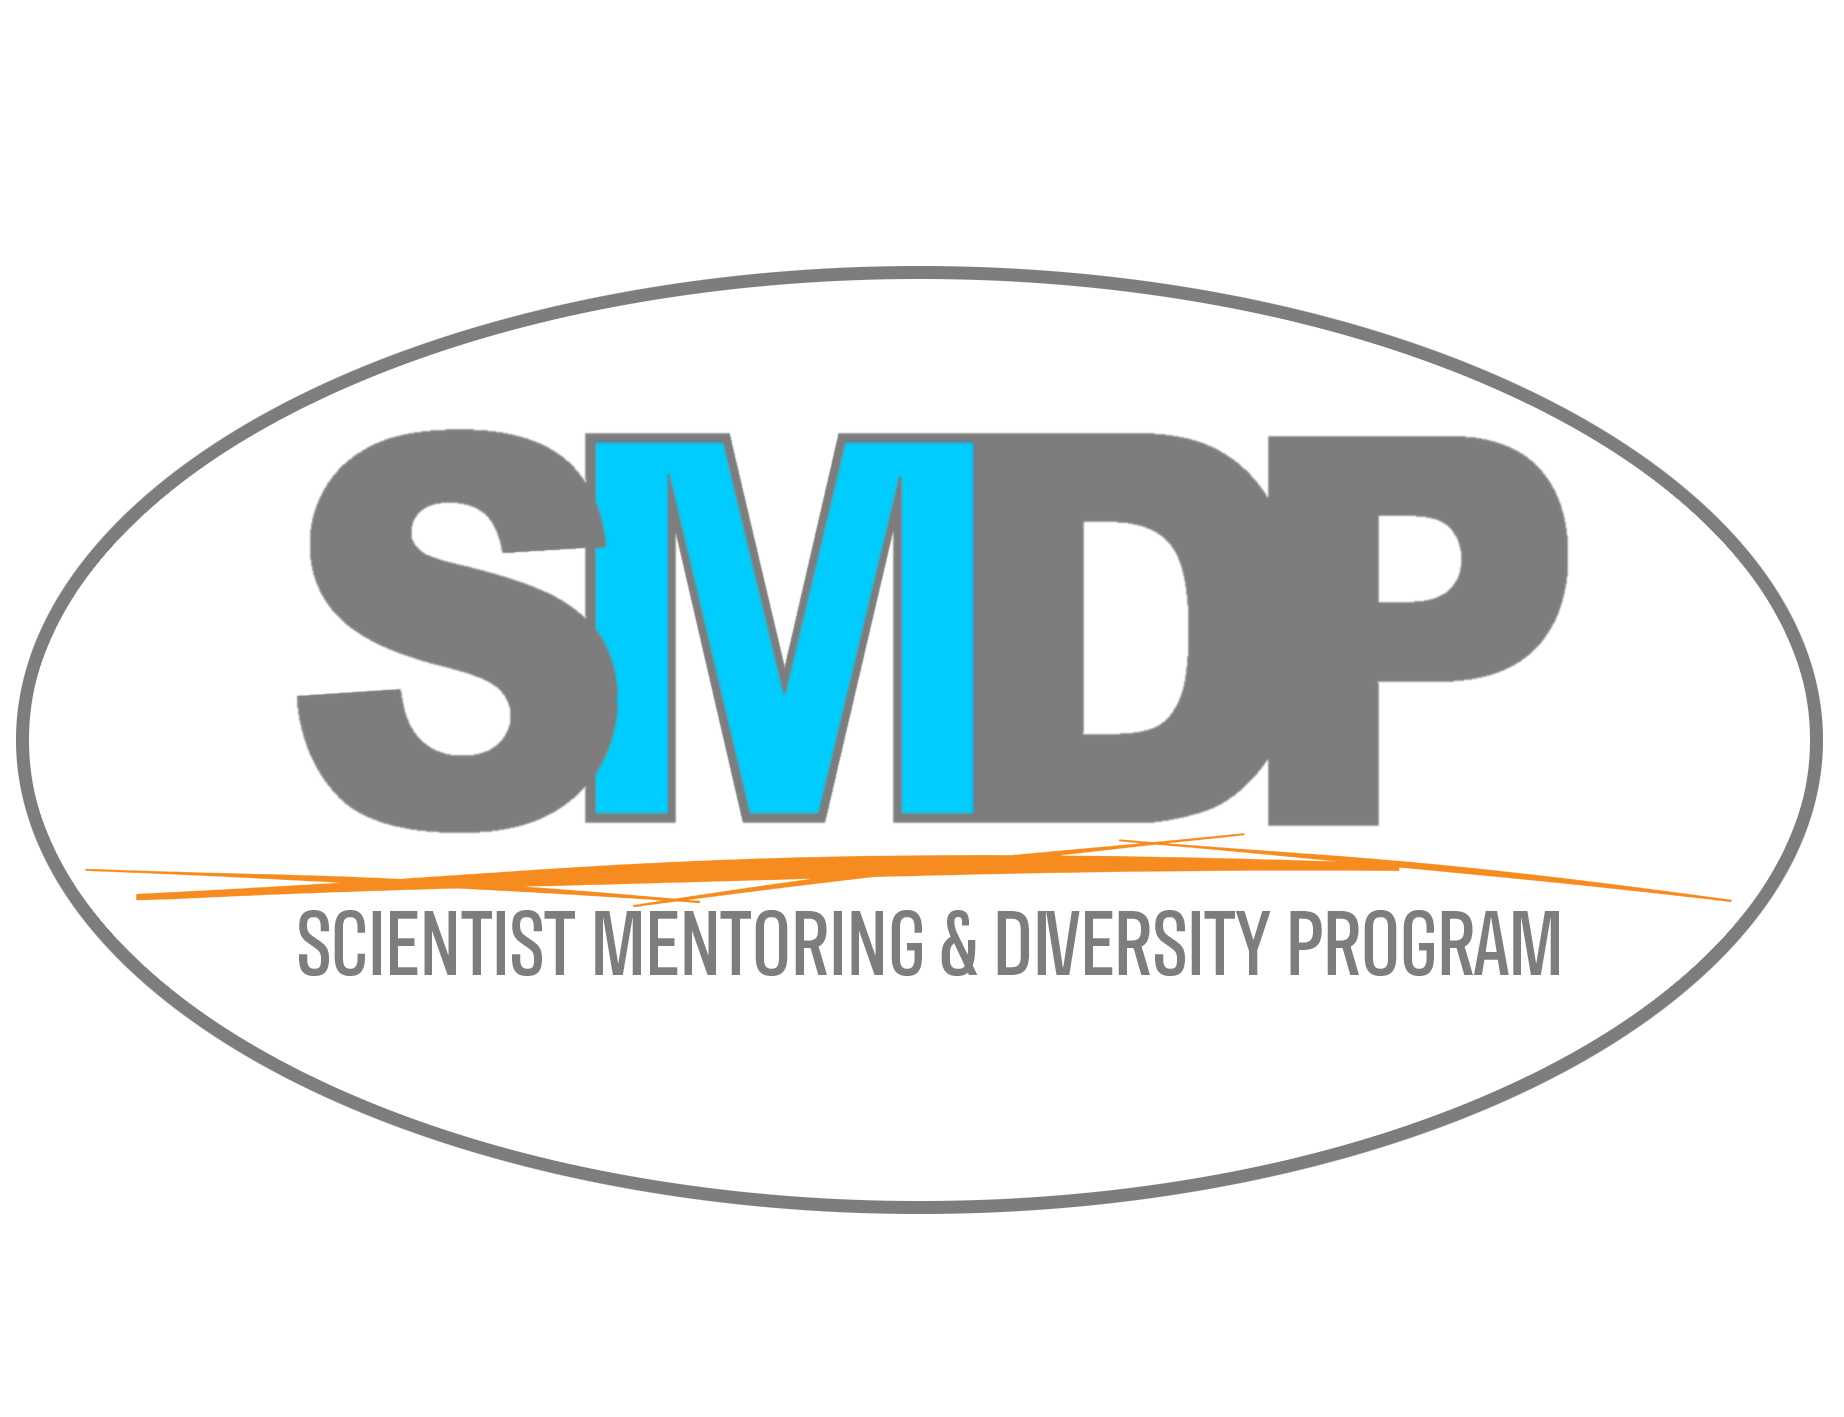 SMDP Sponsorship News